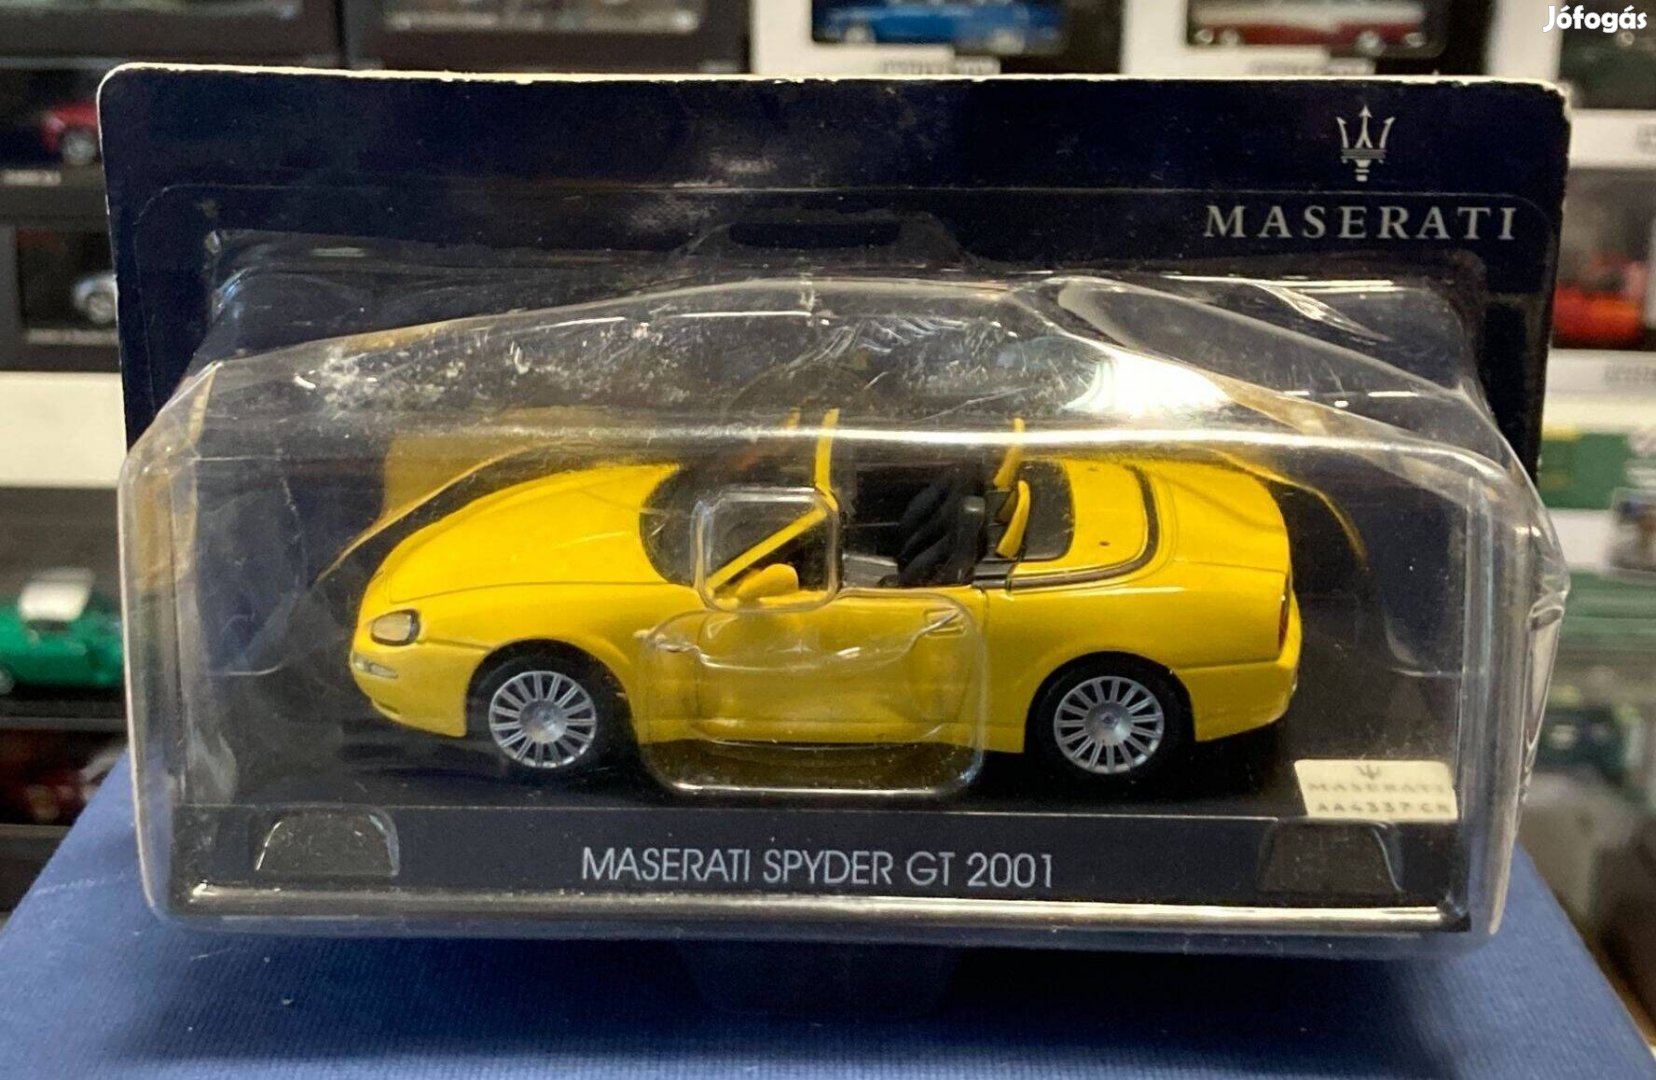 Maserati Spyder GT 2001 1:43 1/43 Altaya